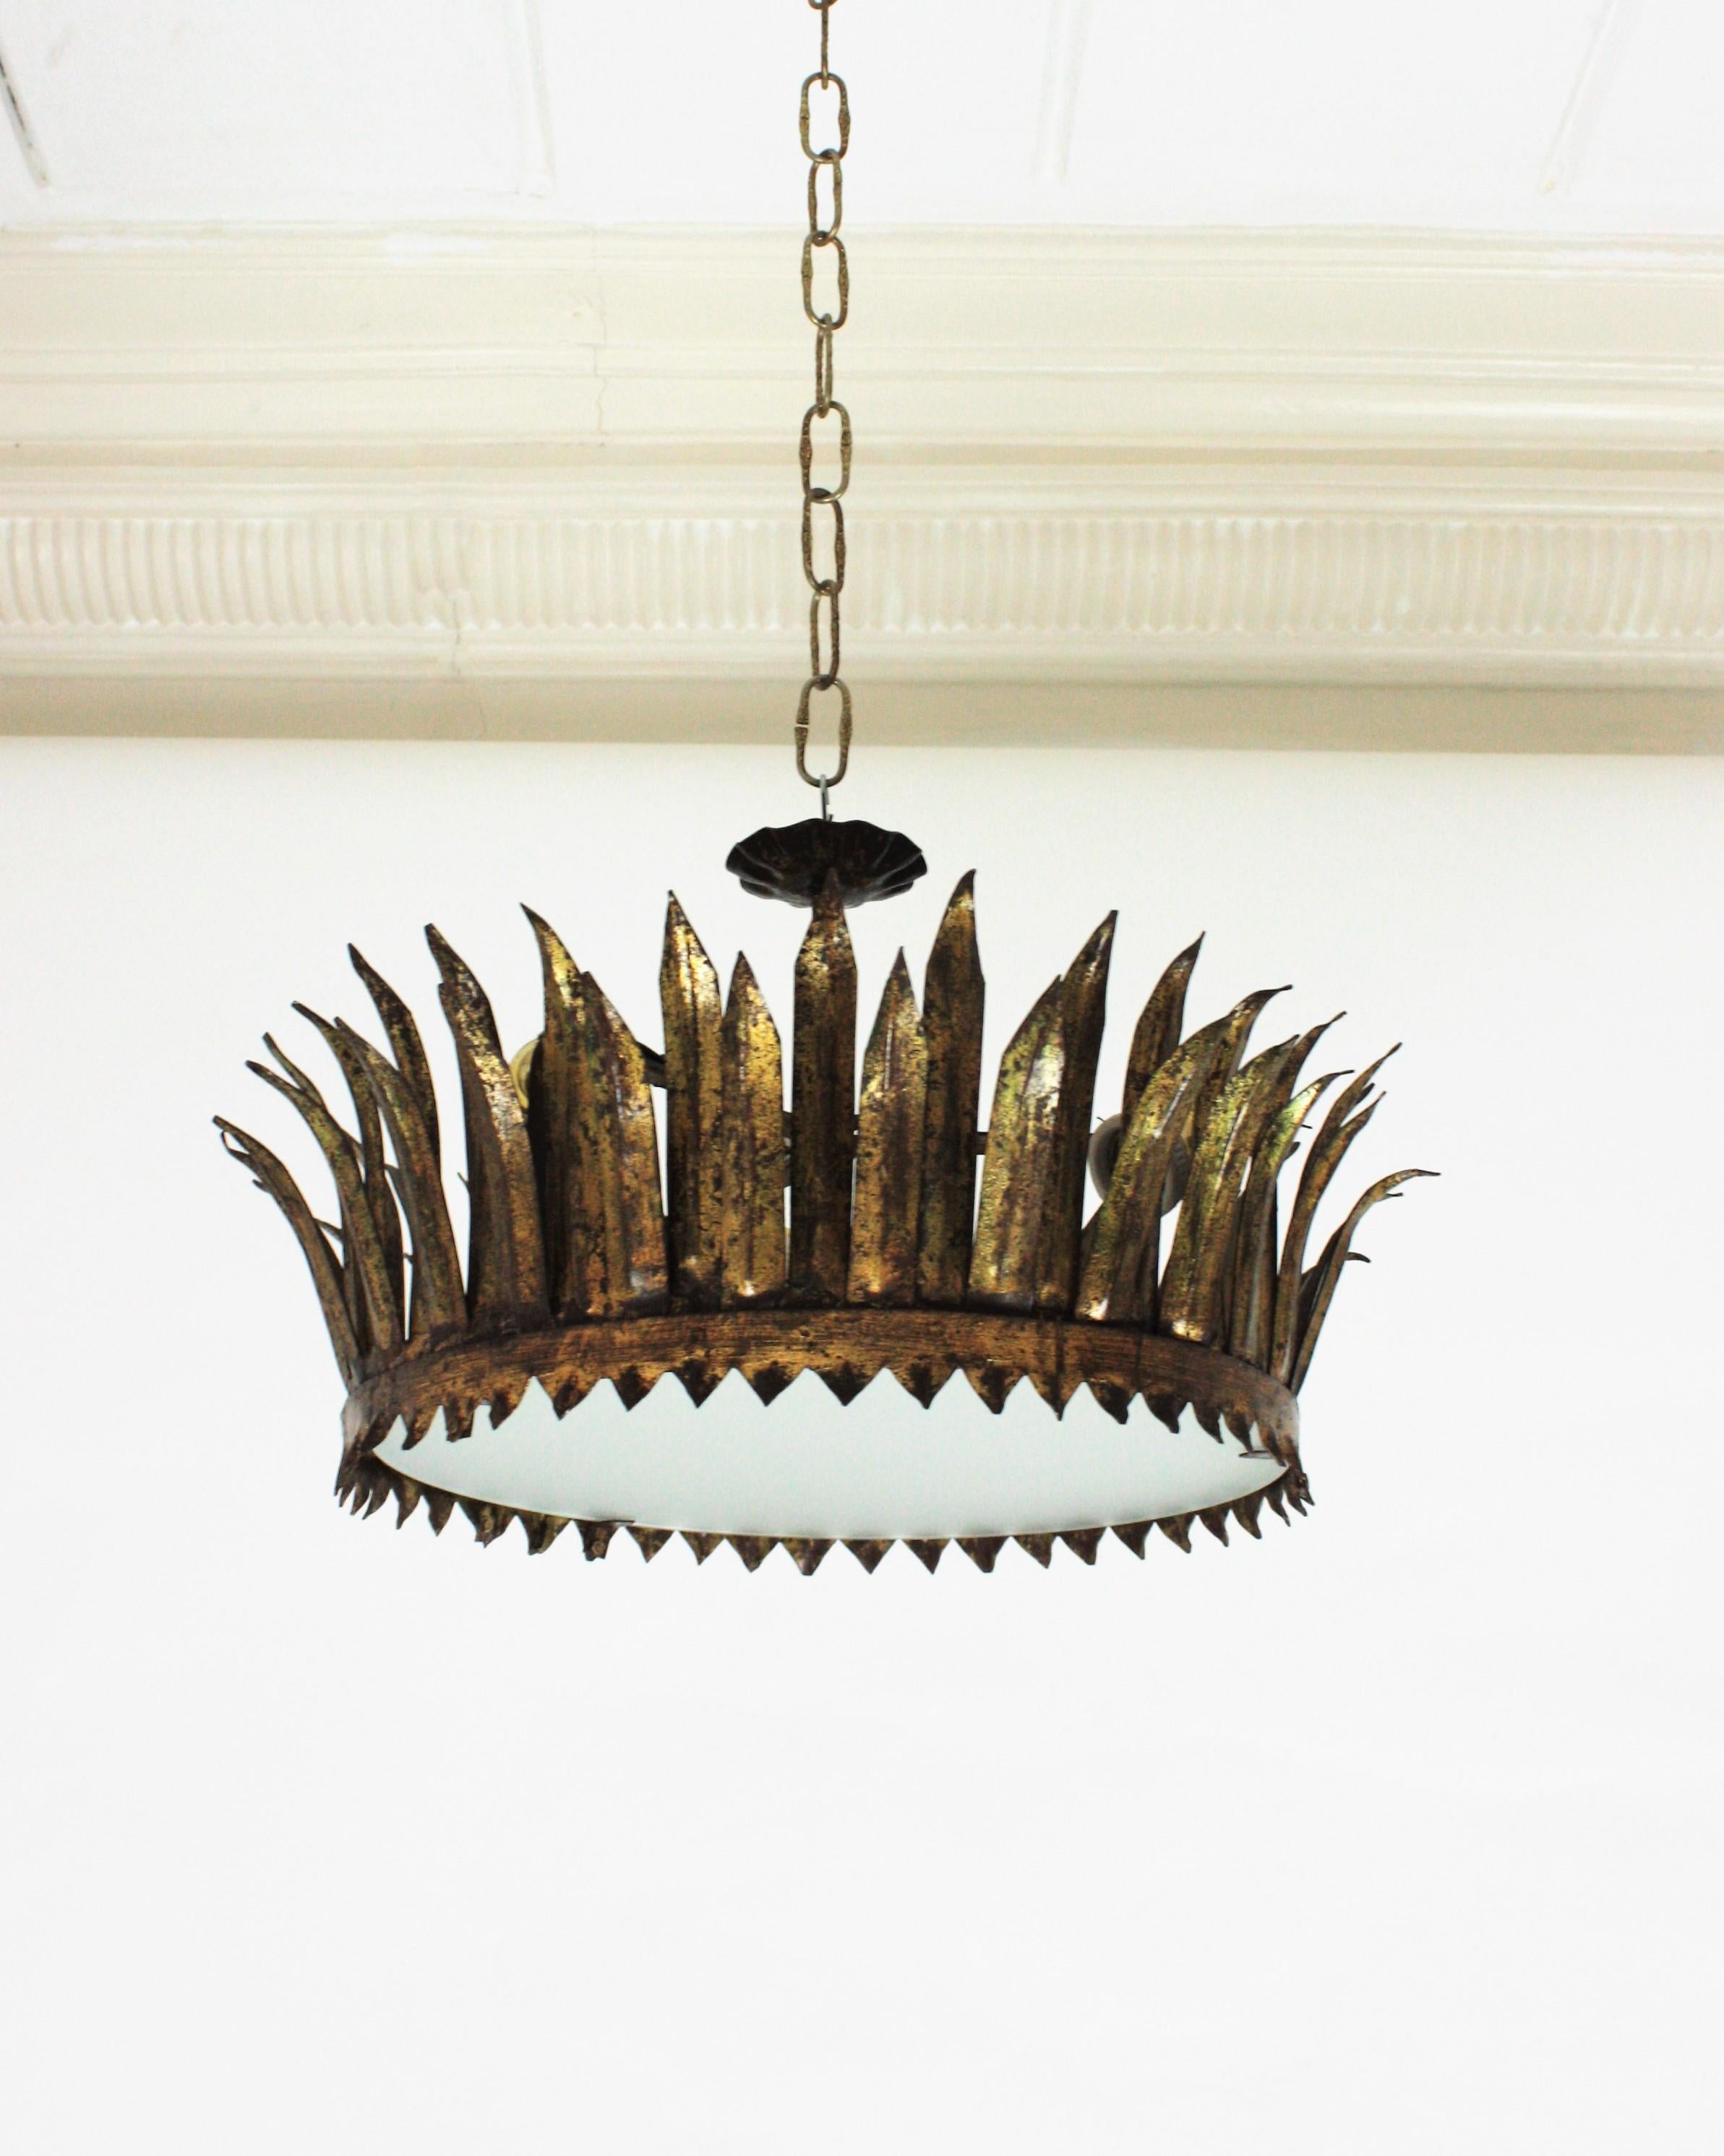 20th Century French Gilt Metal Sunburst Crown Ceiling Light Fixture or Pendant